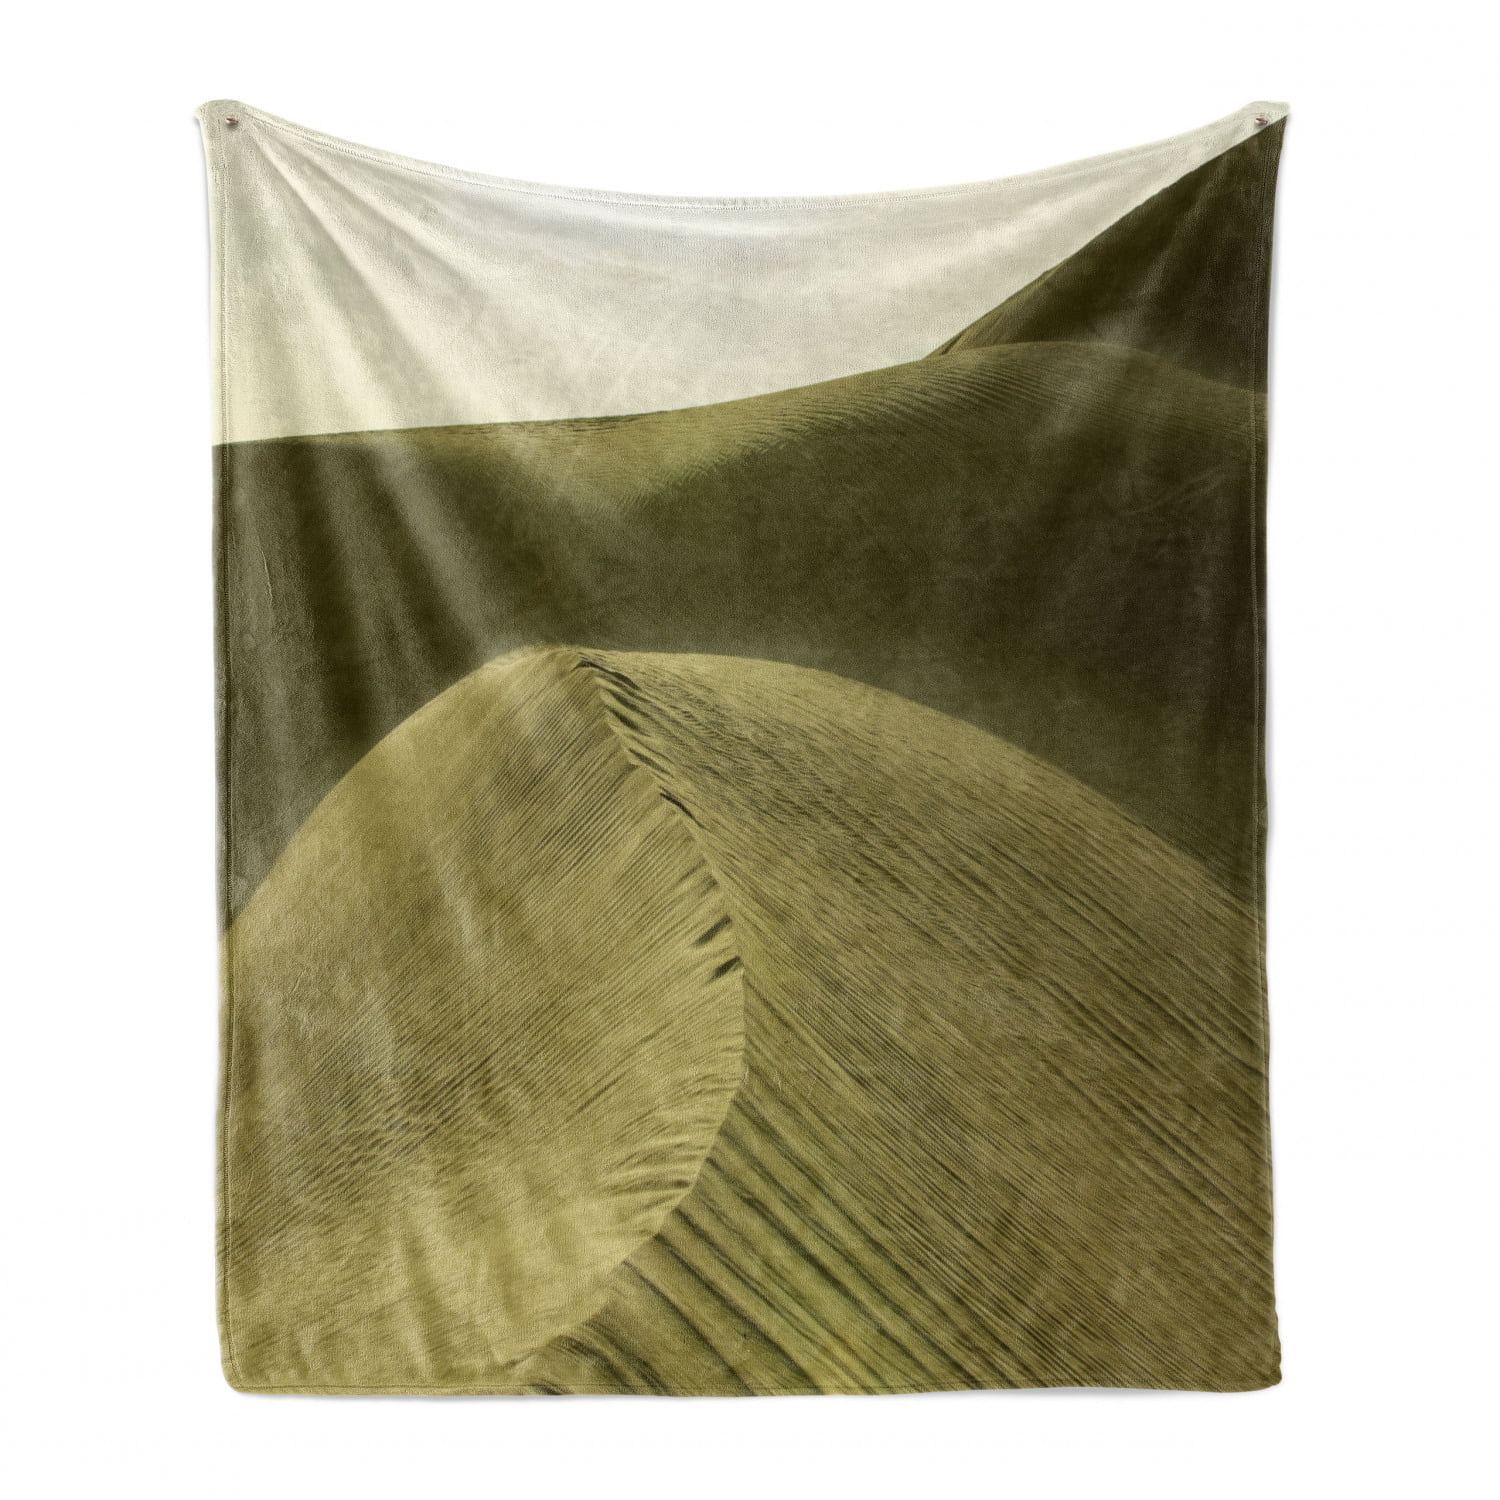 50 x 60 Photo of Desert Nature Sand Sunlight Footprints Dunes Ambesonne Desert Soft Flannel Fleece Throw Blanket Slate Brown Eggshell Cozy Plush for Indoor and Outdoor Use 